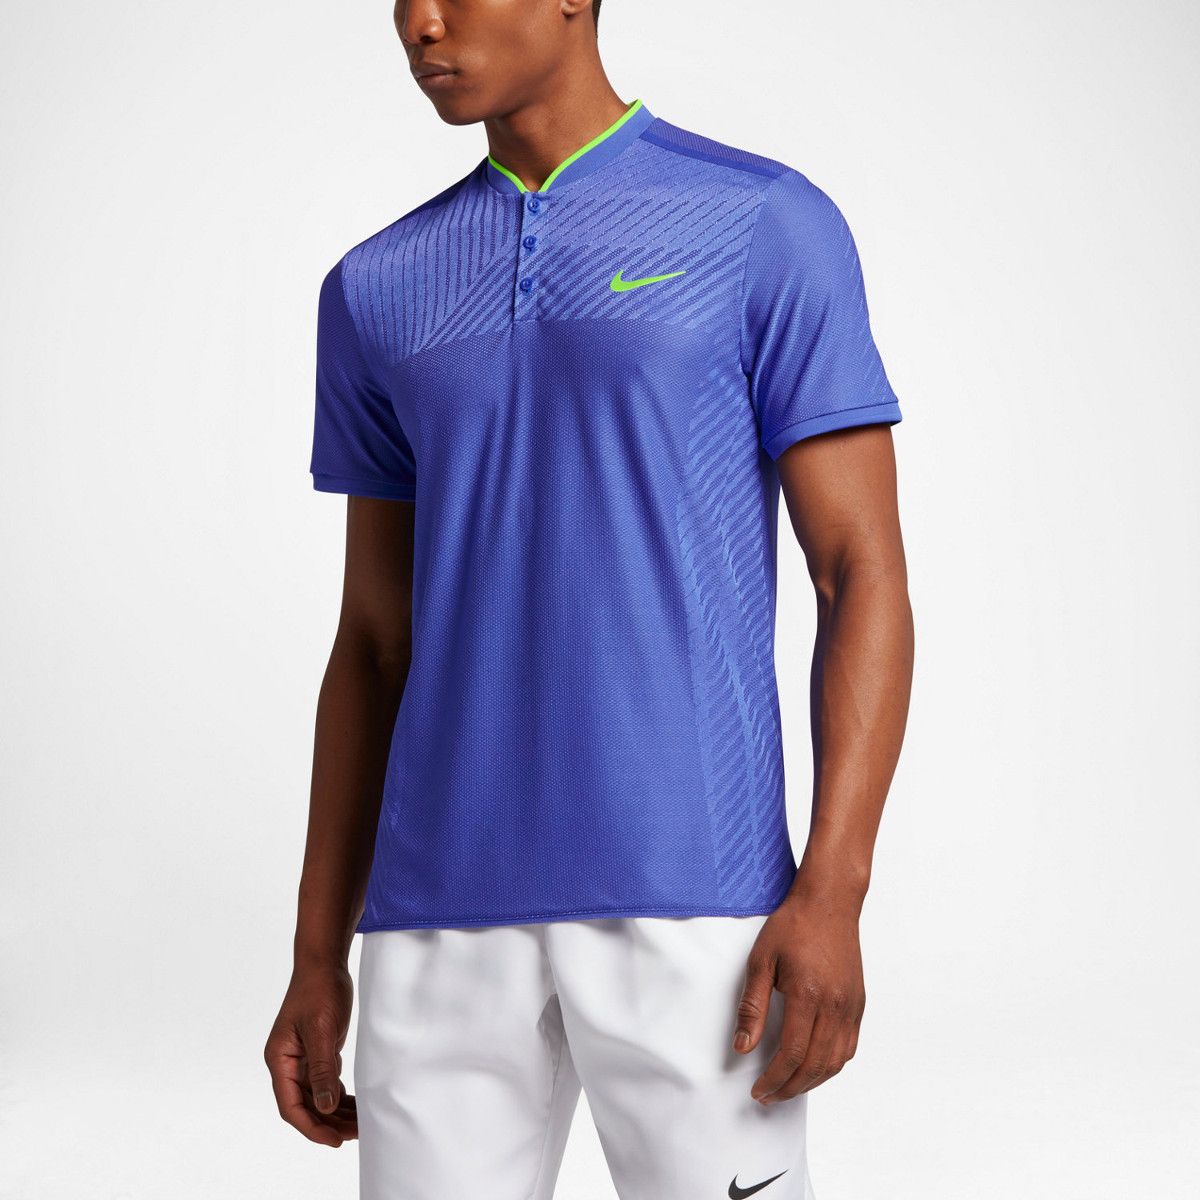 NikeCourt Zonal Cooling Advantage Men's Tennis Polo 830959-4